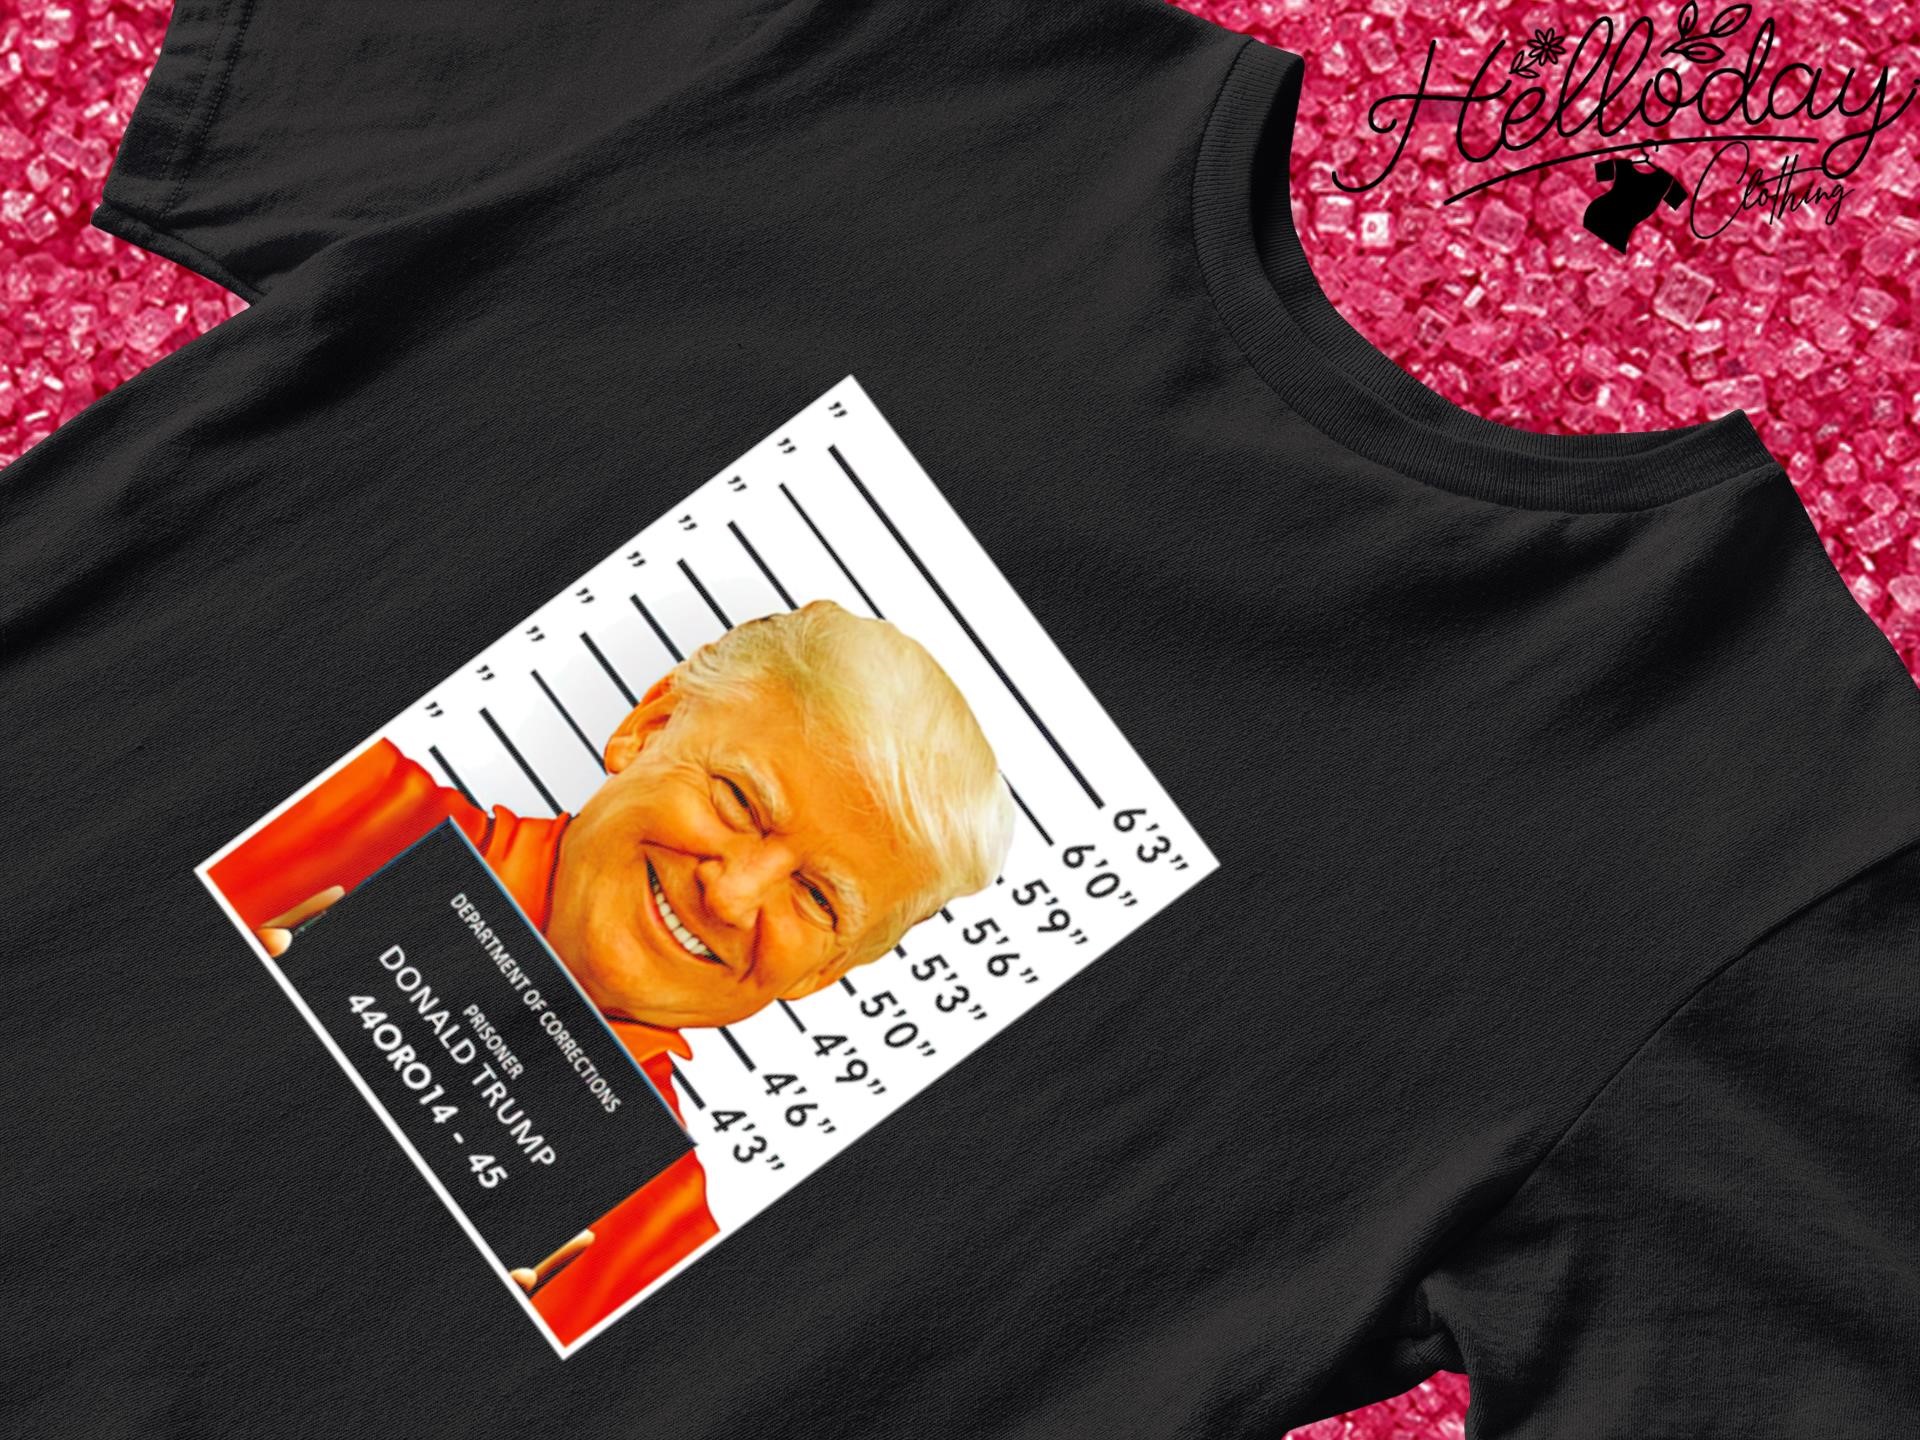 Department of Corrections Prisoner Donald Trump shirt